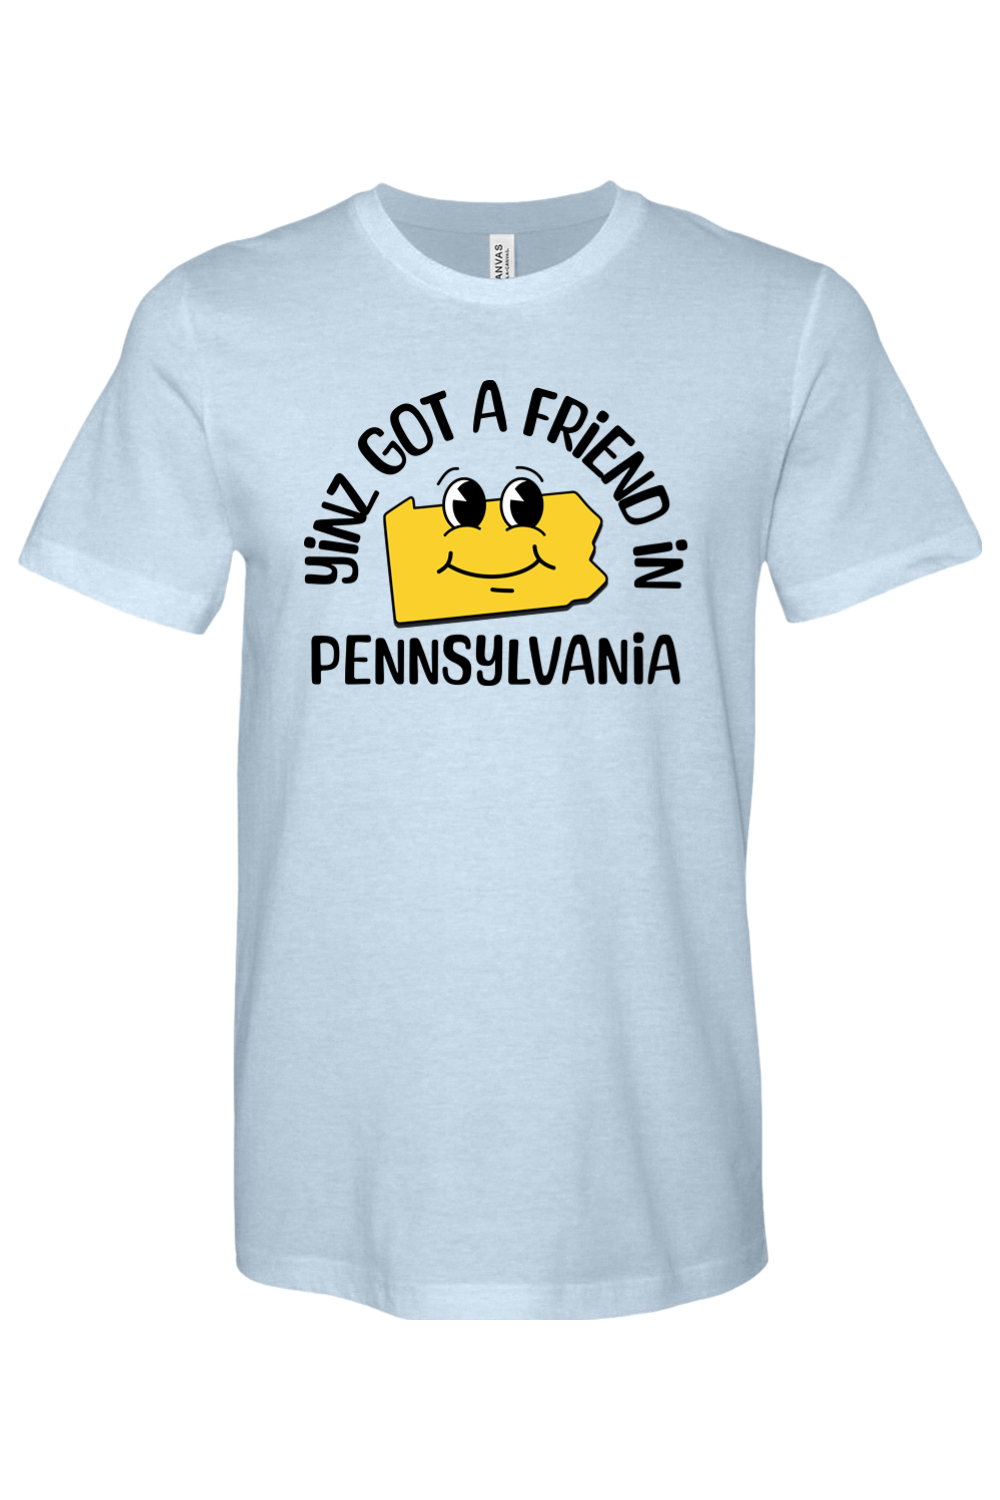 Vintage Apparel | Graphic T-Shirts Celebrating Western Pennsylvania